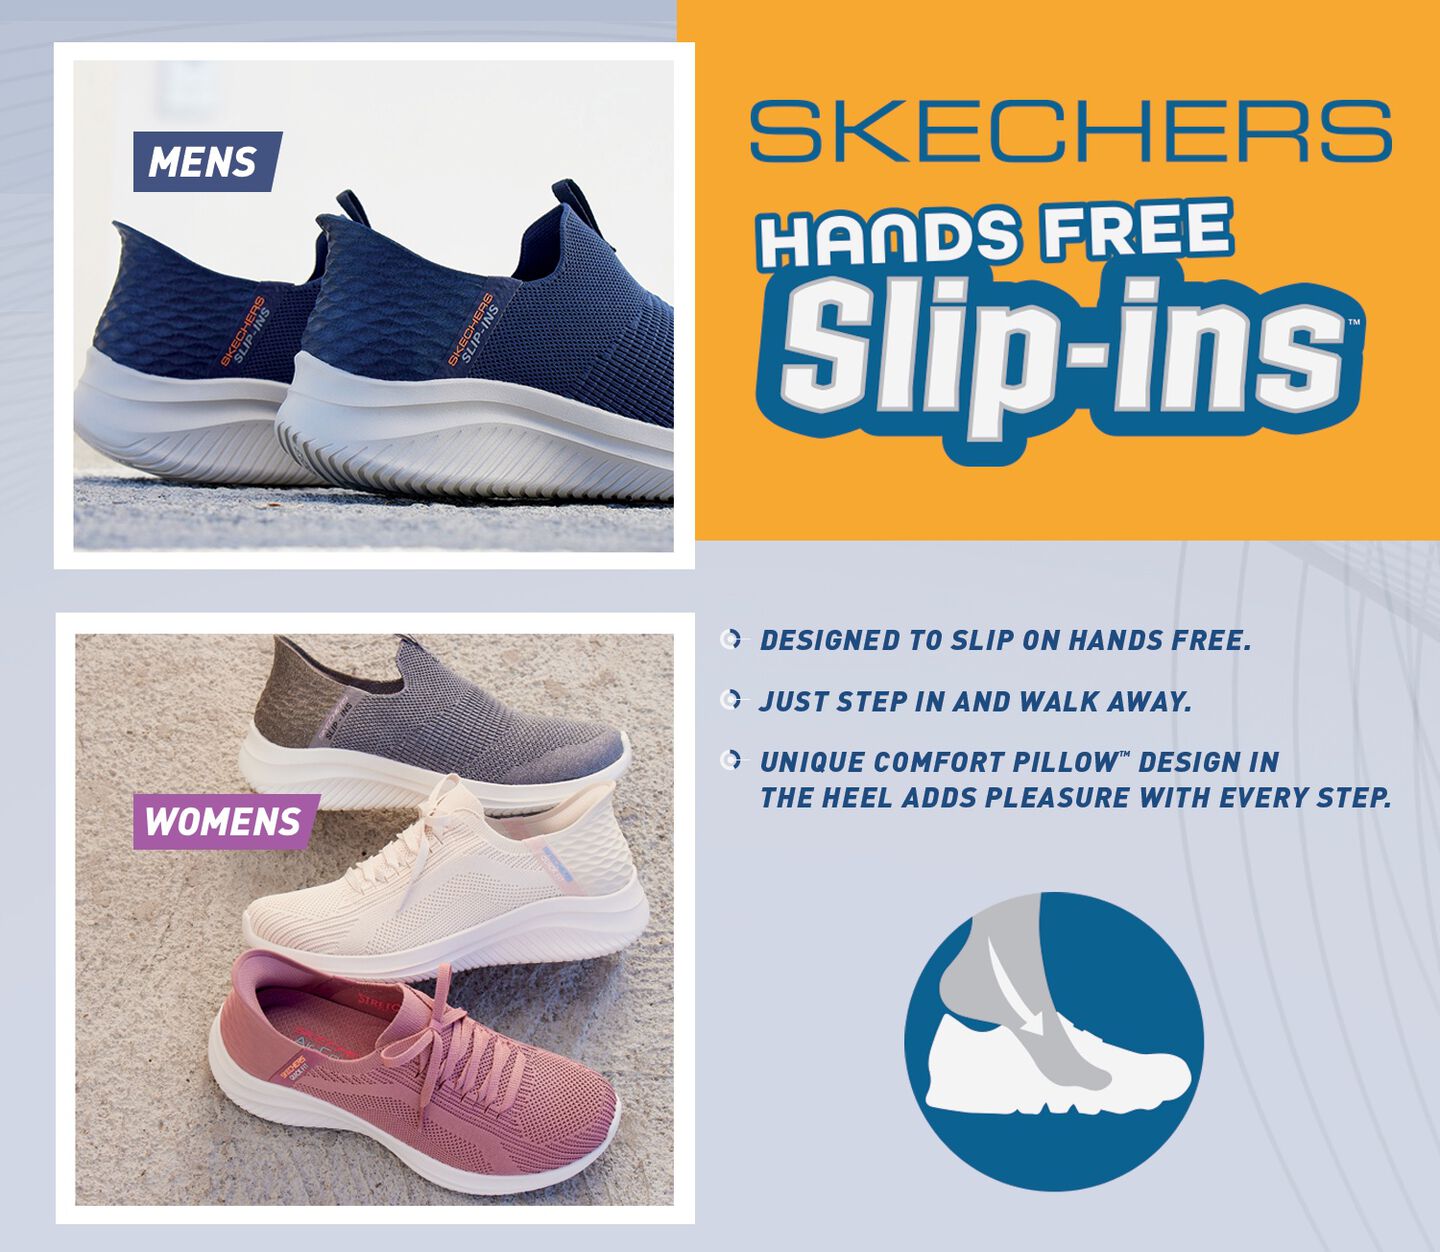 Skechers - Hands-free Slip-ins - Shop Now image